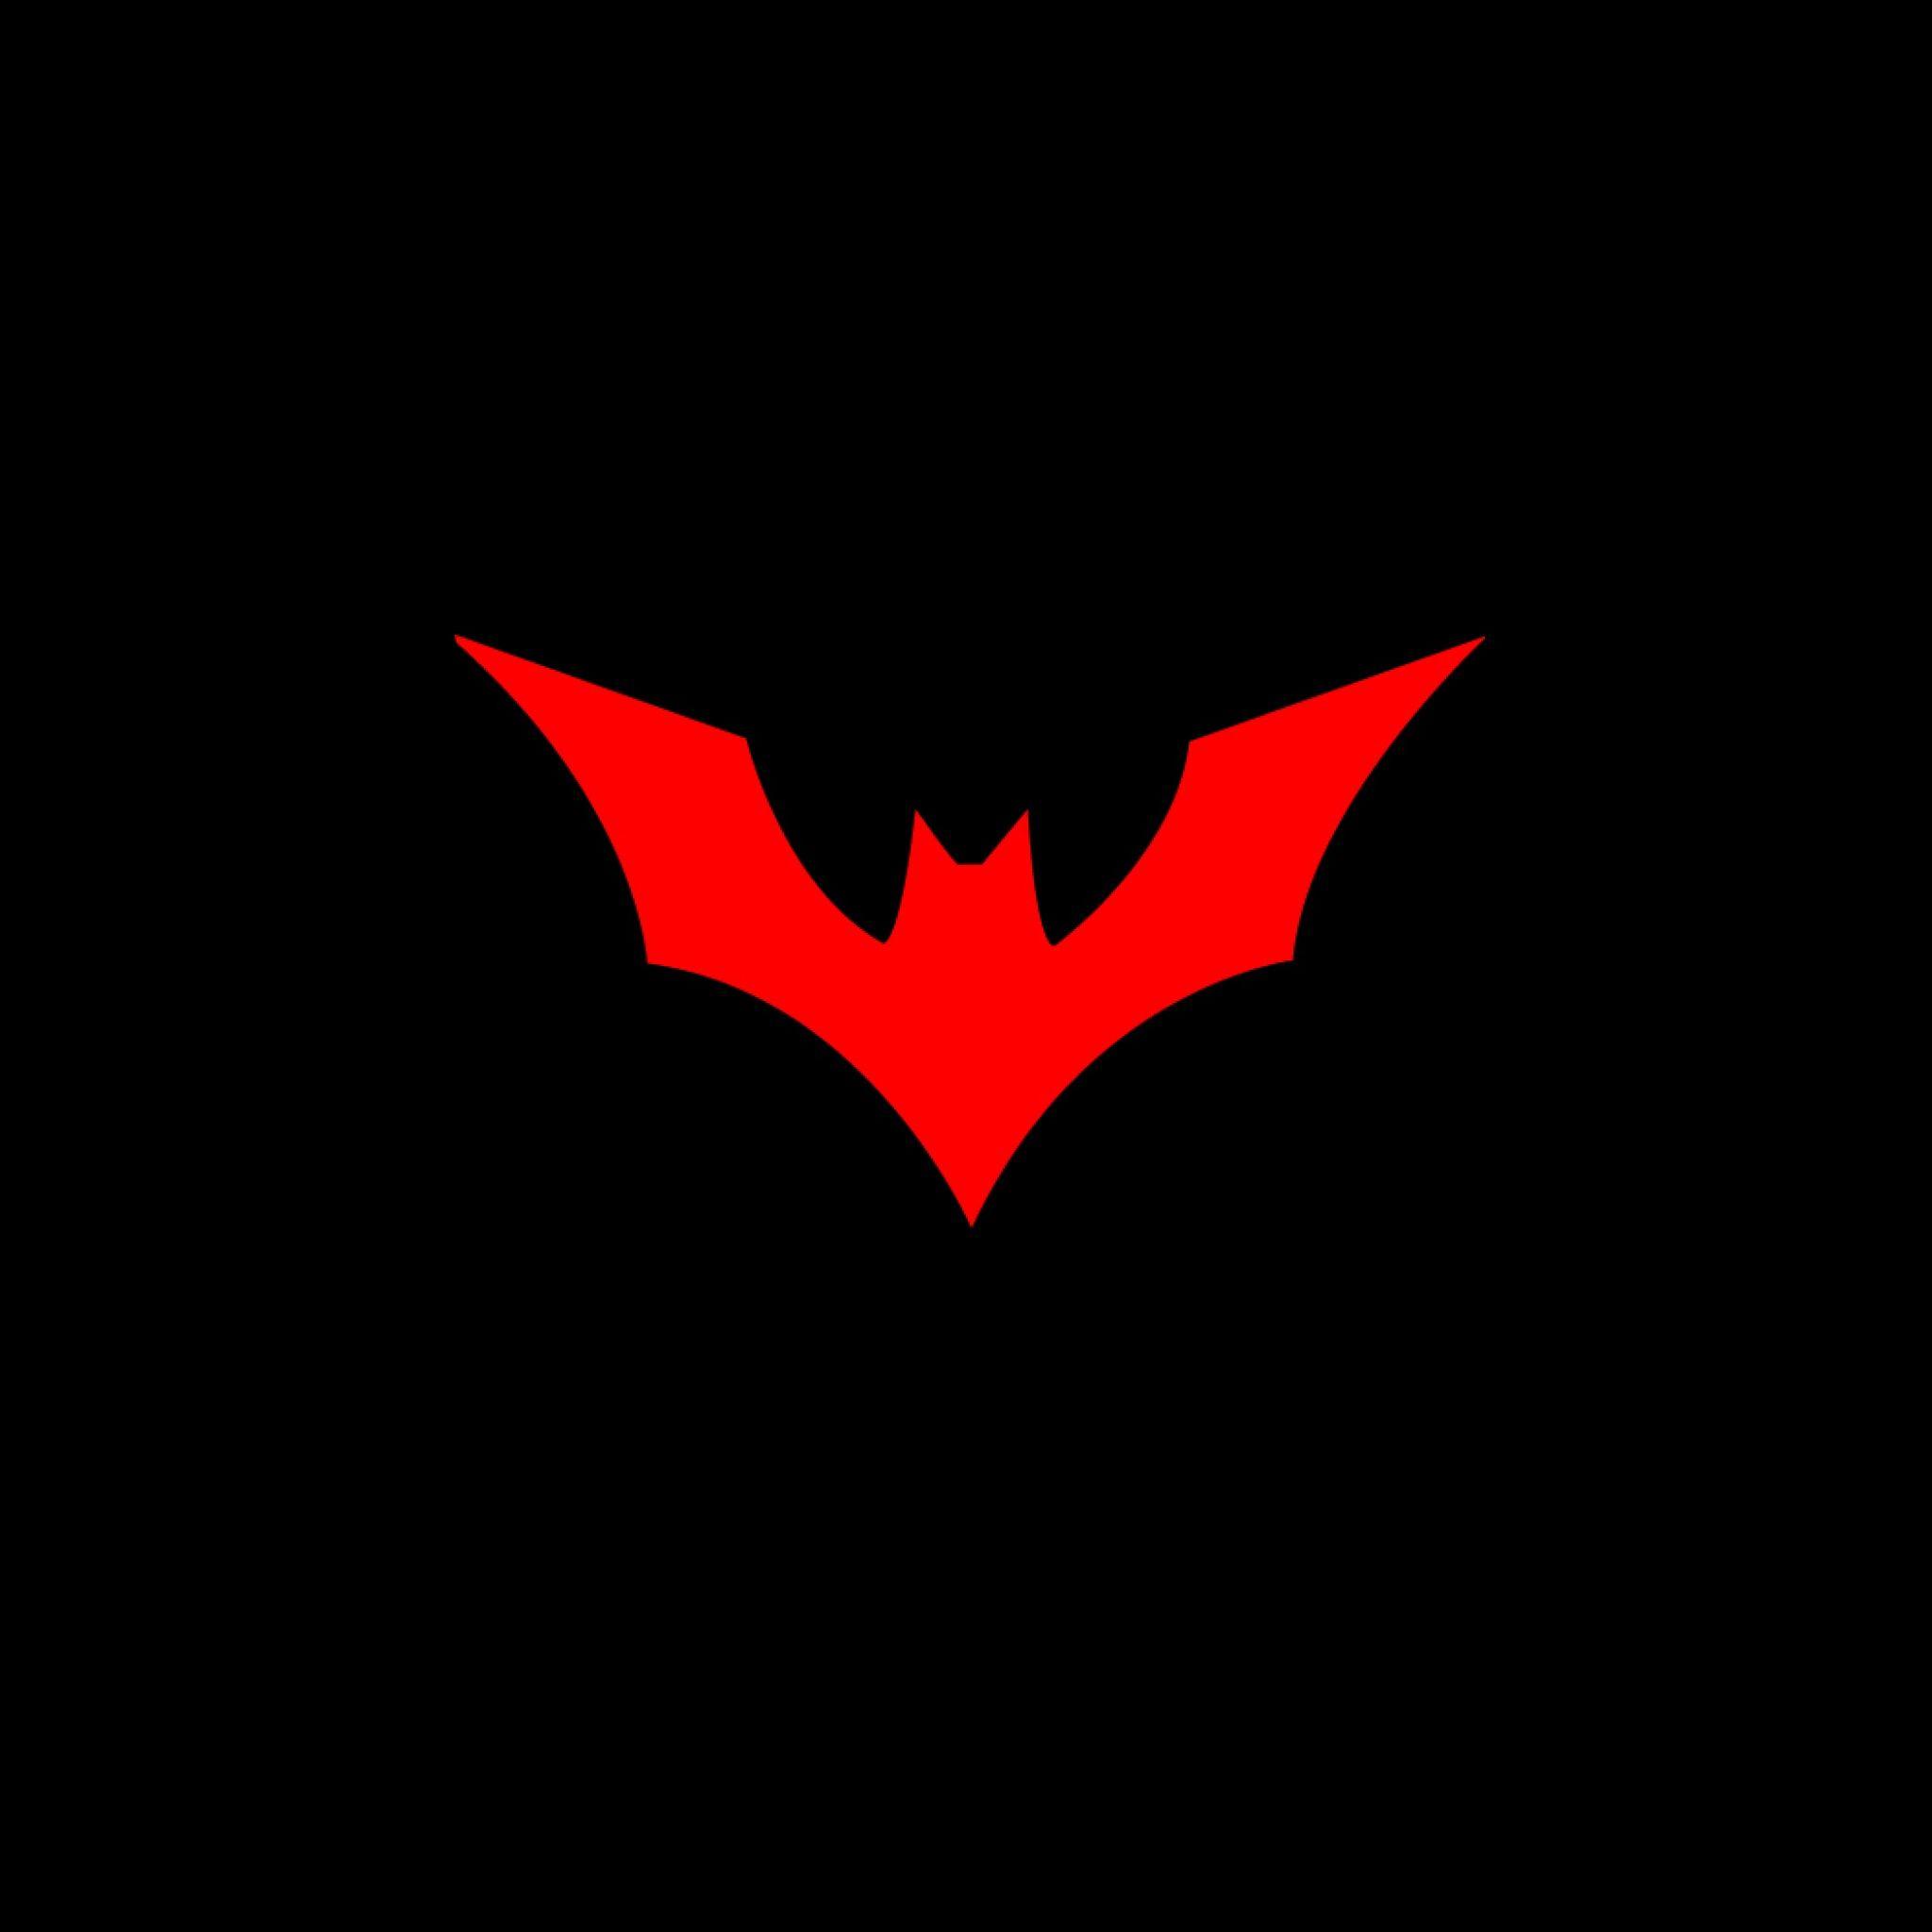 Red and Black Batman Logo - Download Red Batman Logo 2048 x 2048 Wallpapers - 4608483 - black ...